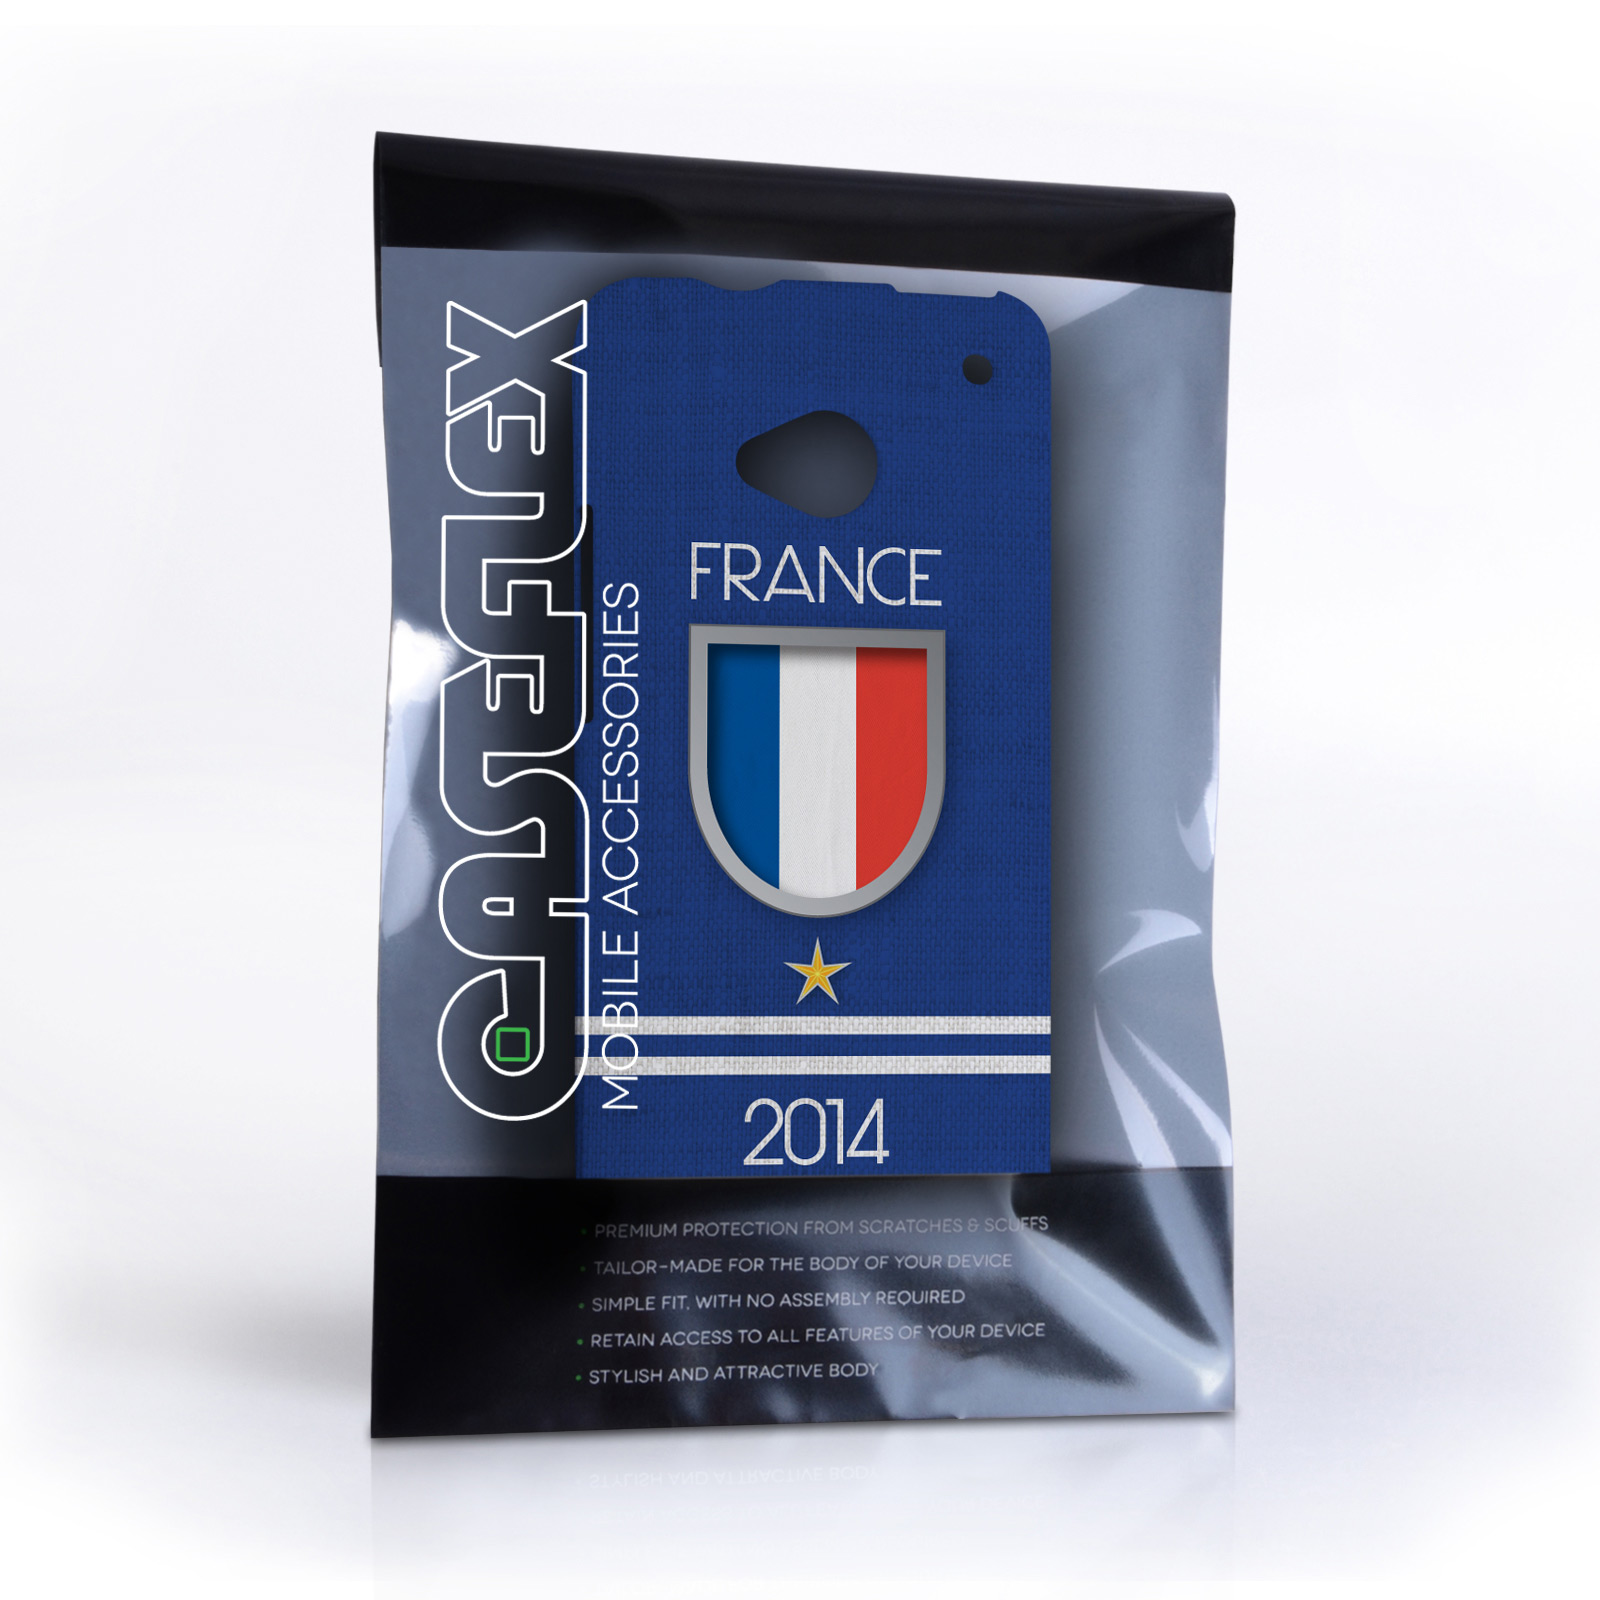 Caseflex HTC One France World Cup Case